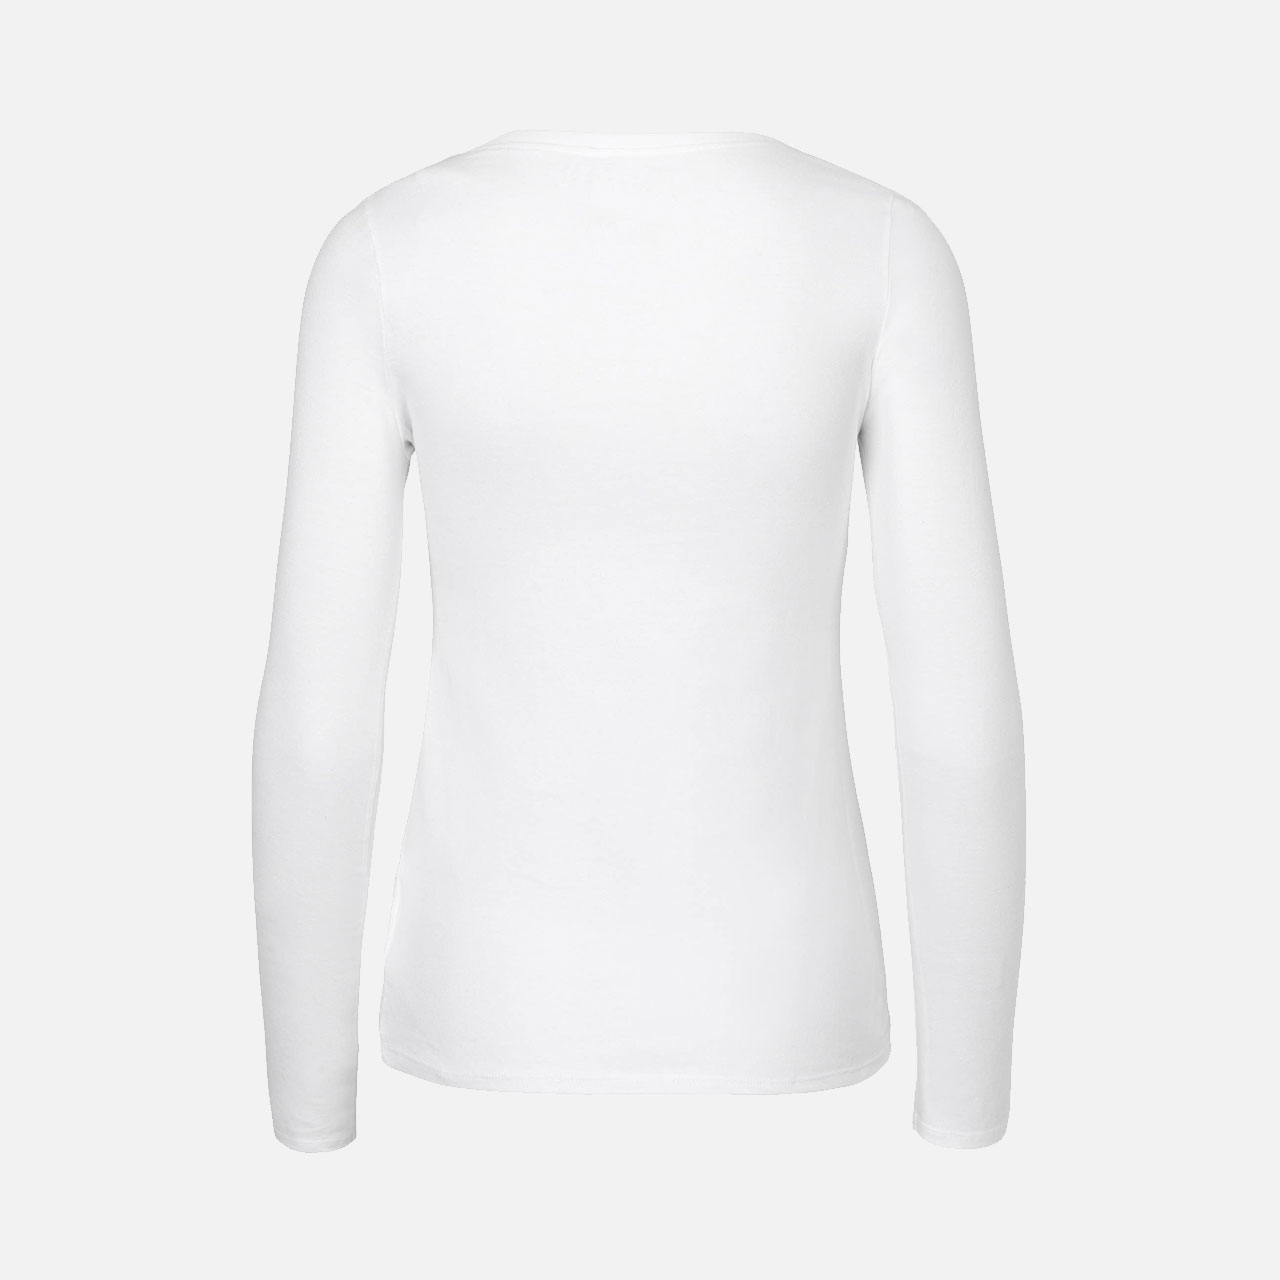 Doppelpack Ladies Long Sleeve Shirt - Navy / Weiss L Navy / Weiss